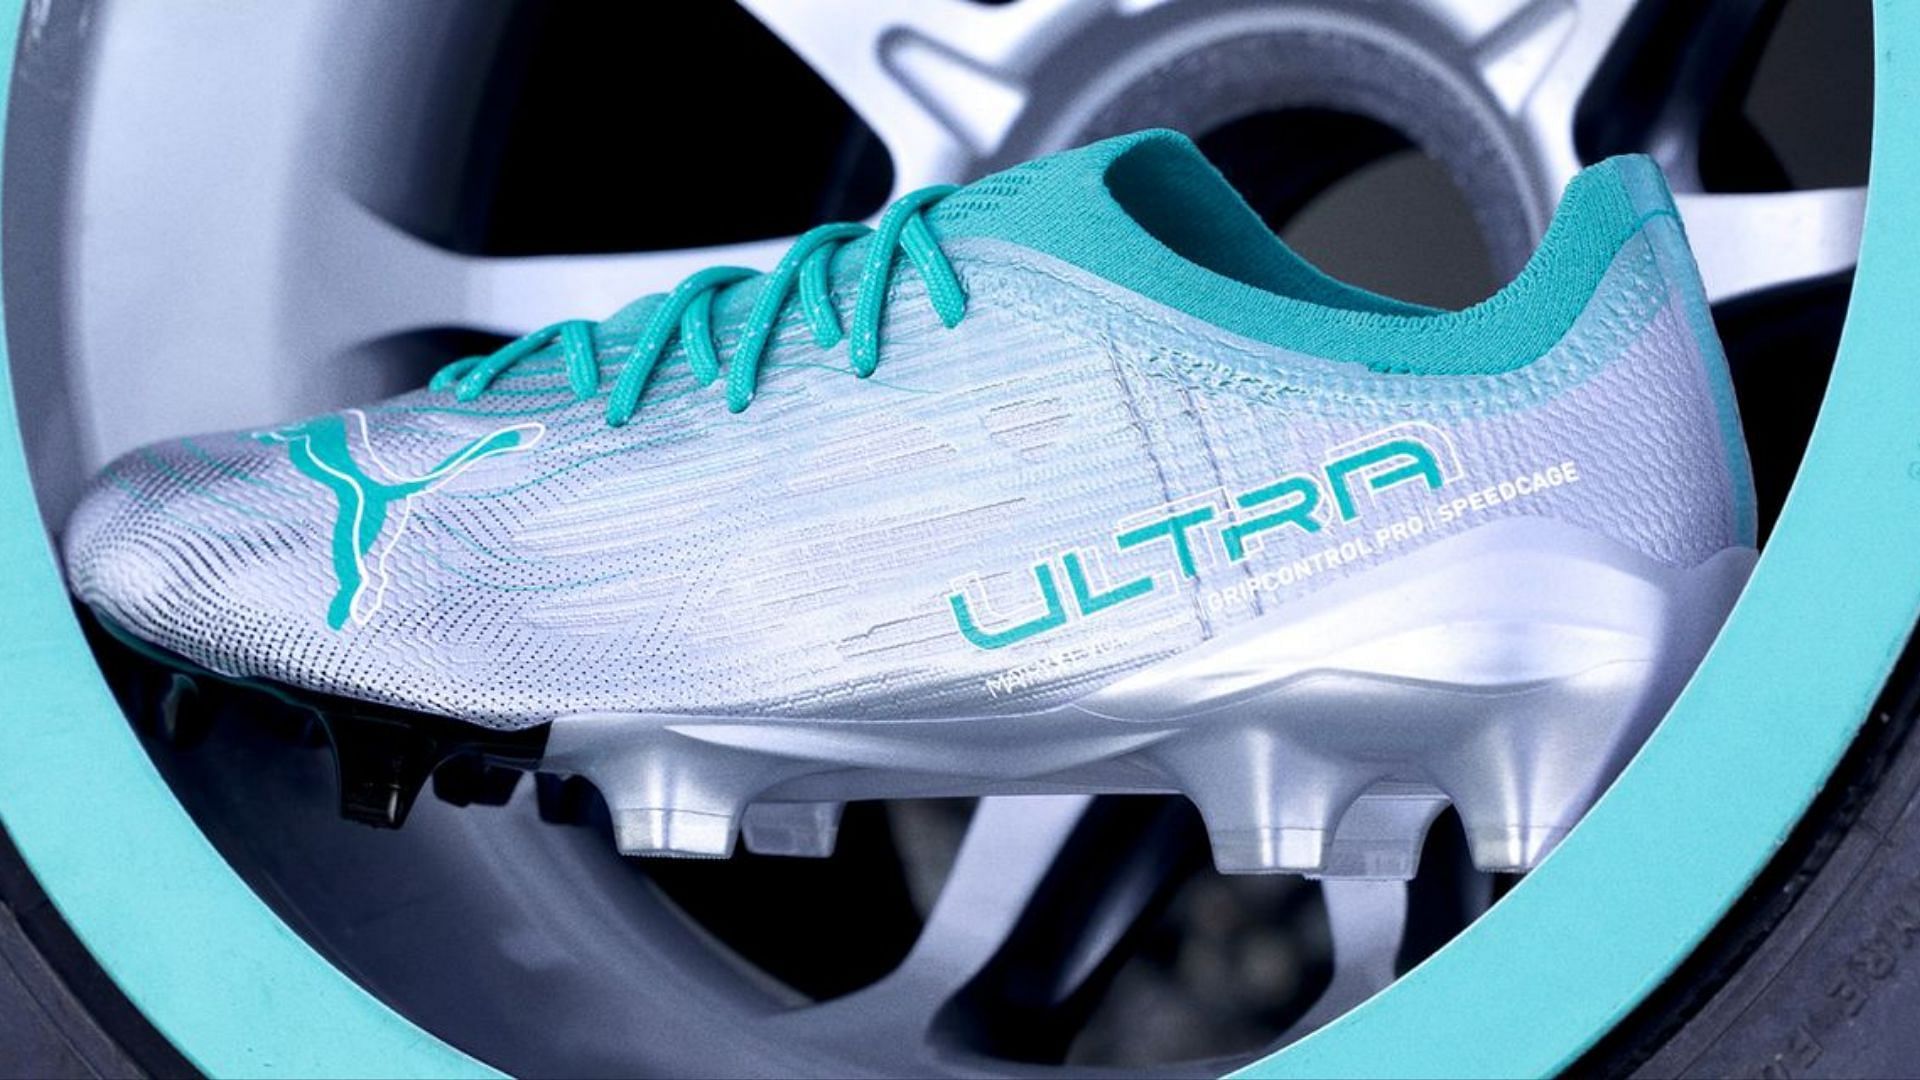 MAPF1 ULTRA 1.4 football boots (Image via Puma)